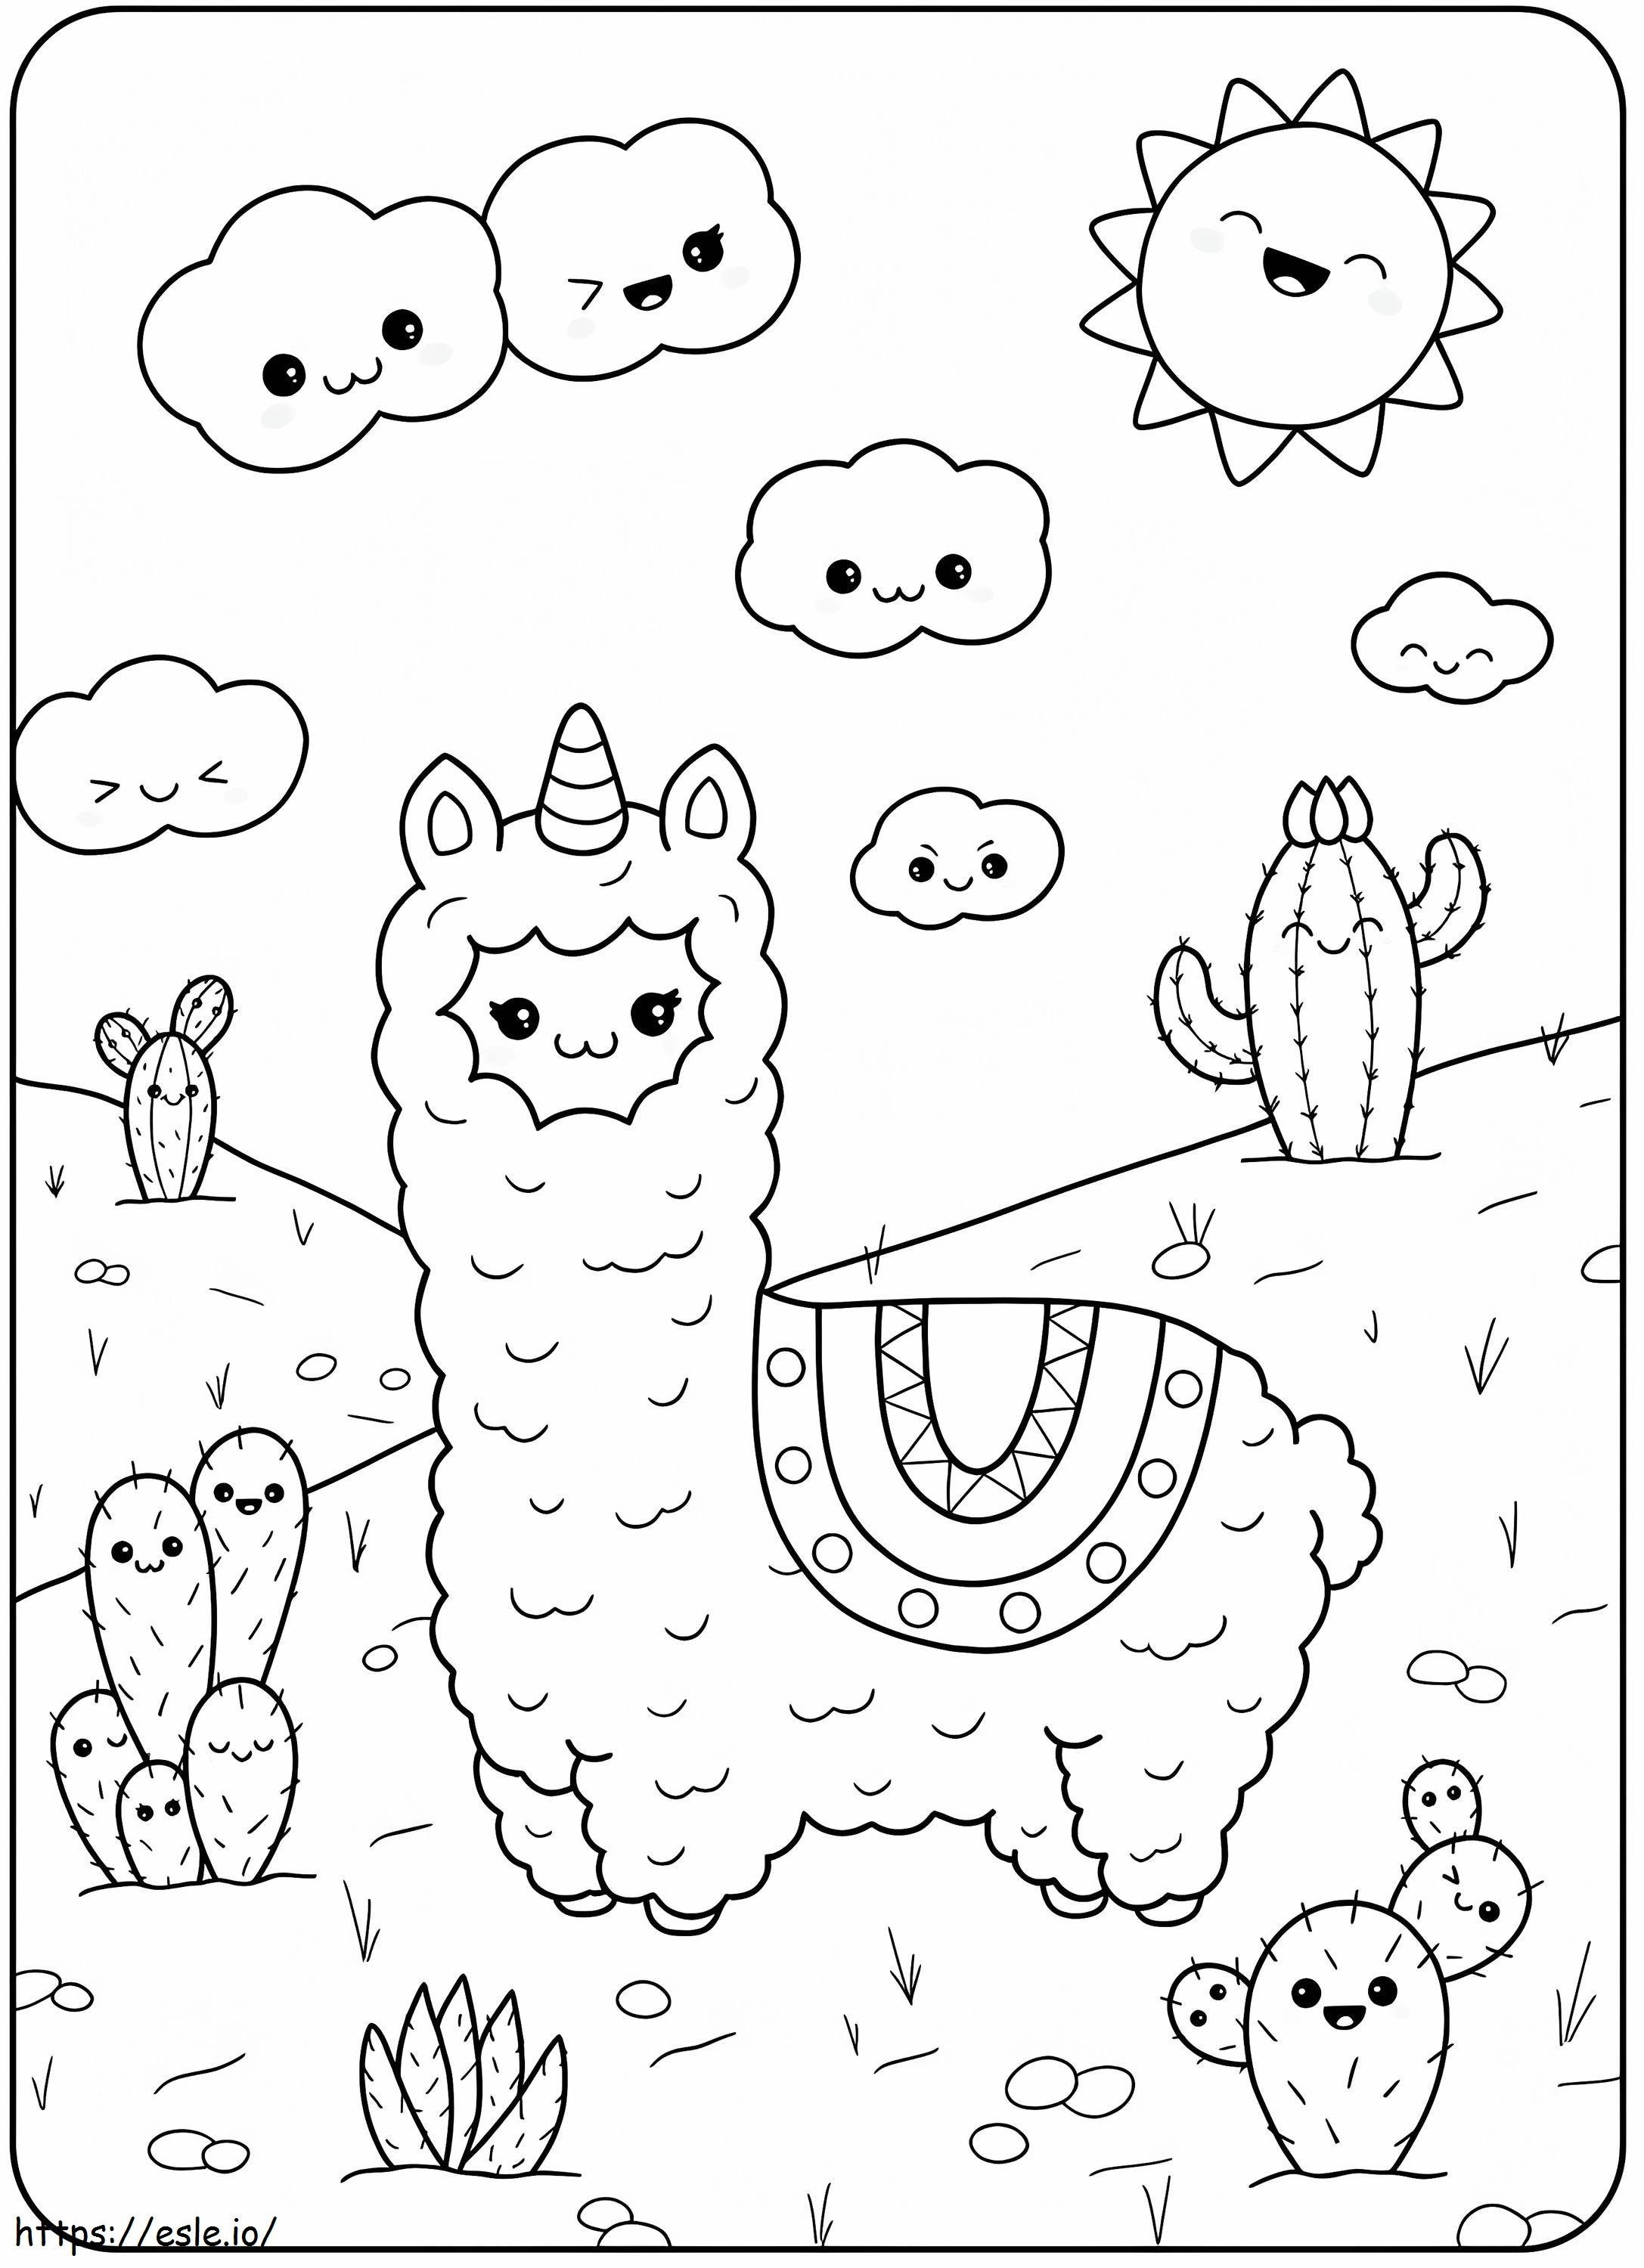 Cute Llamacorn coloring page